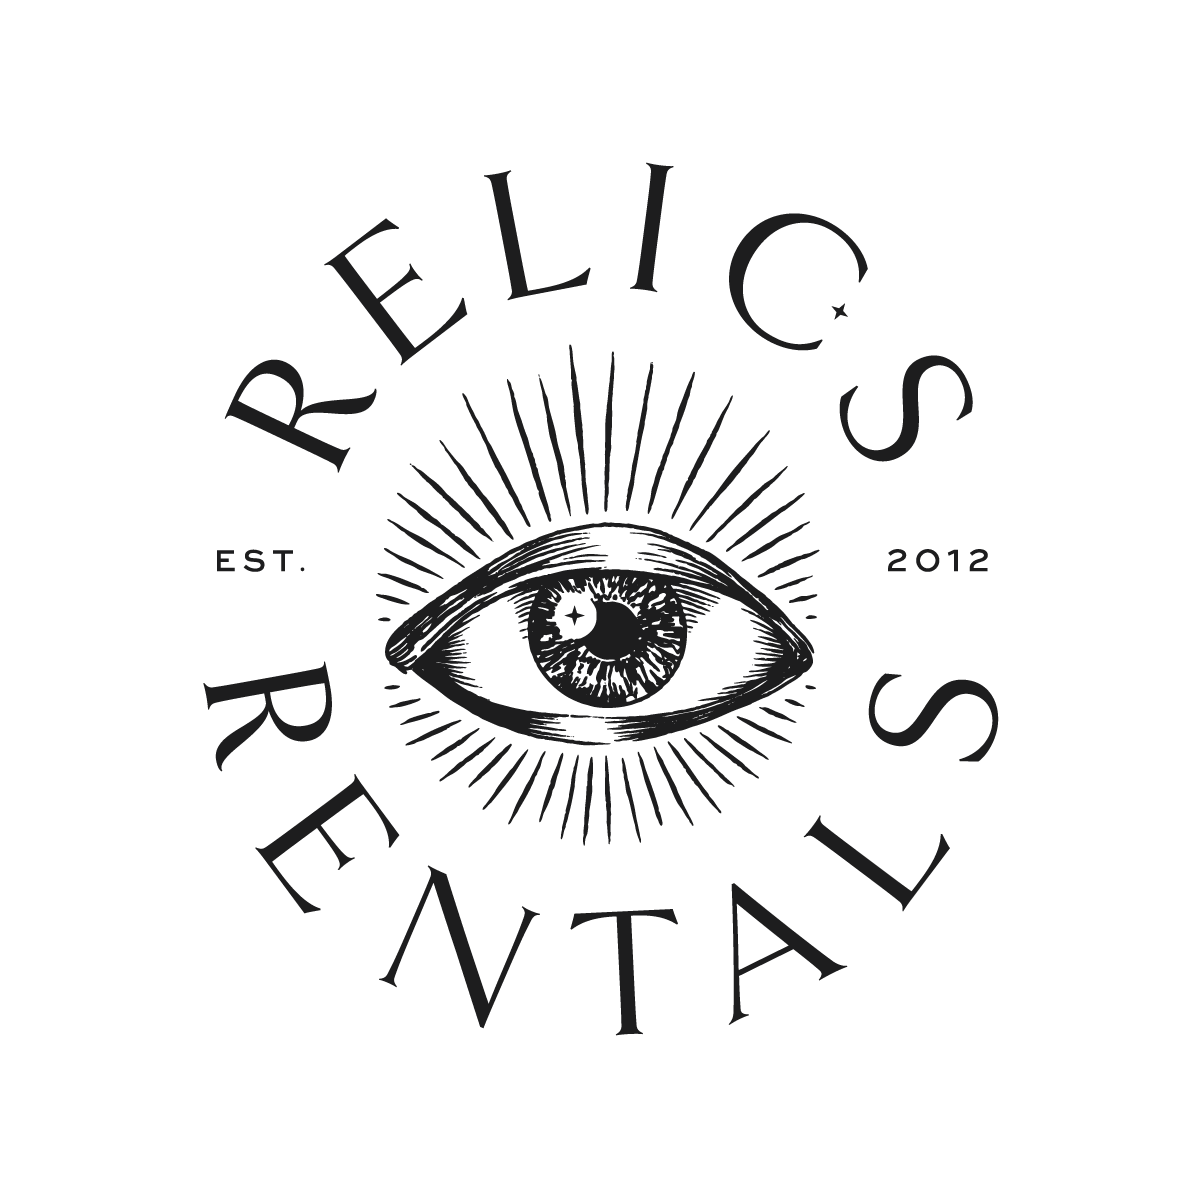 relics logo.png